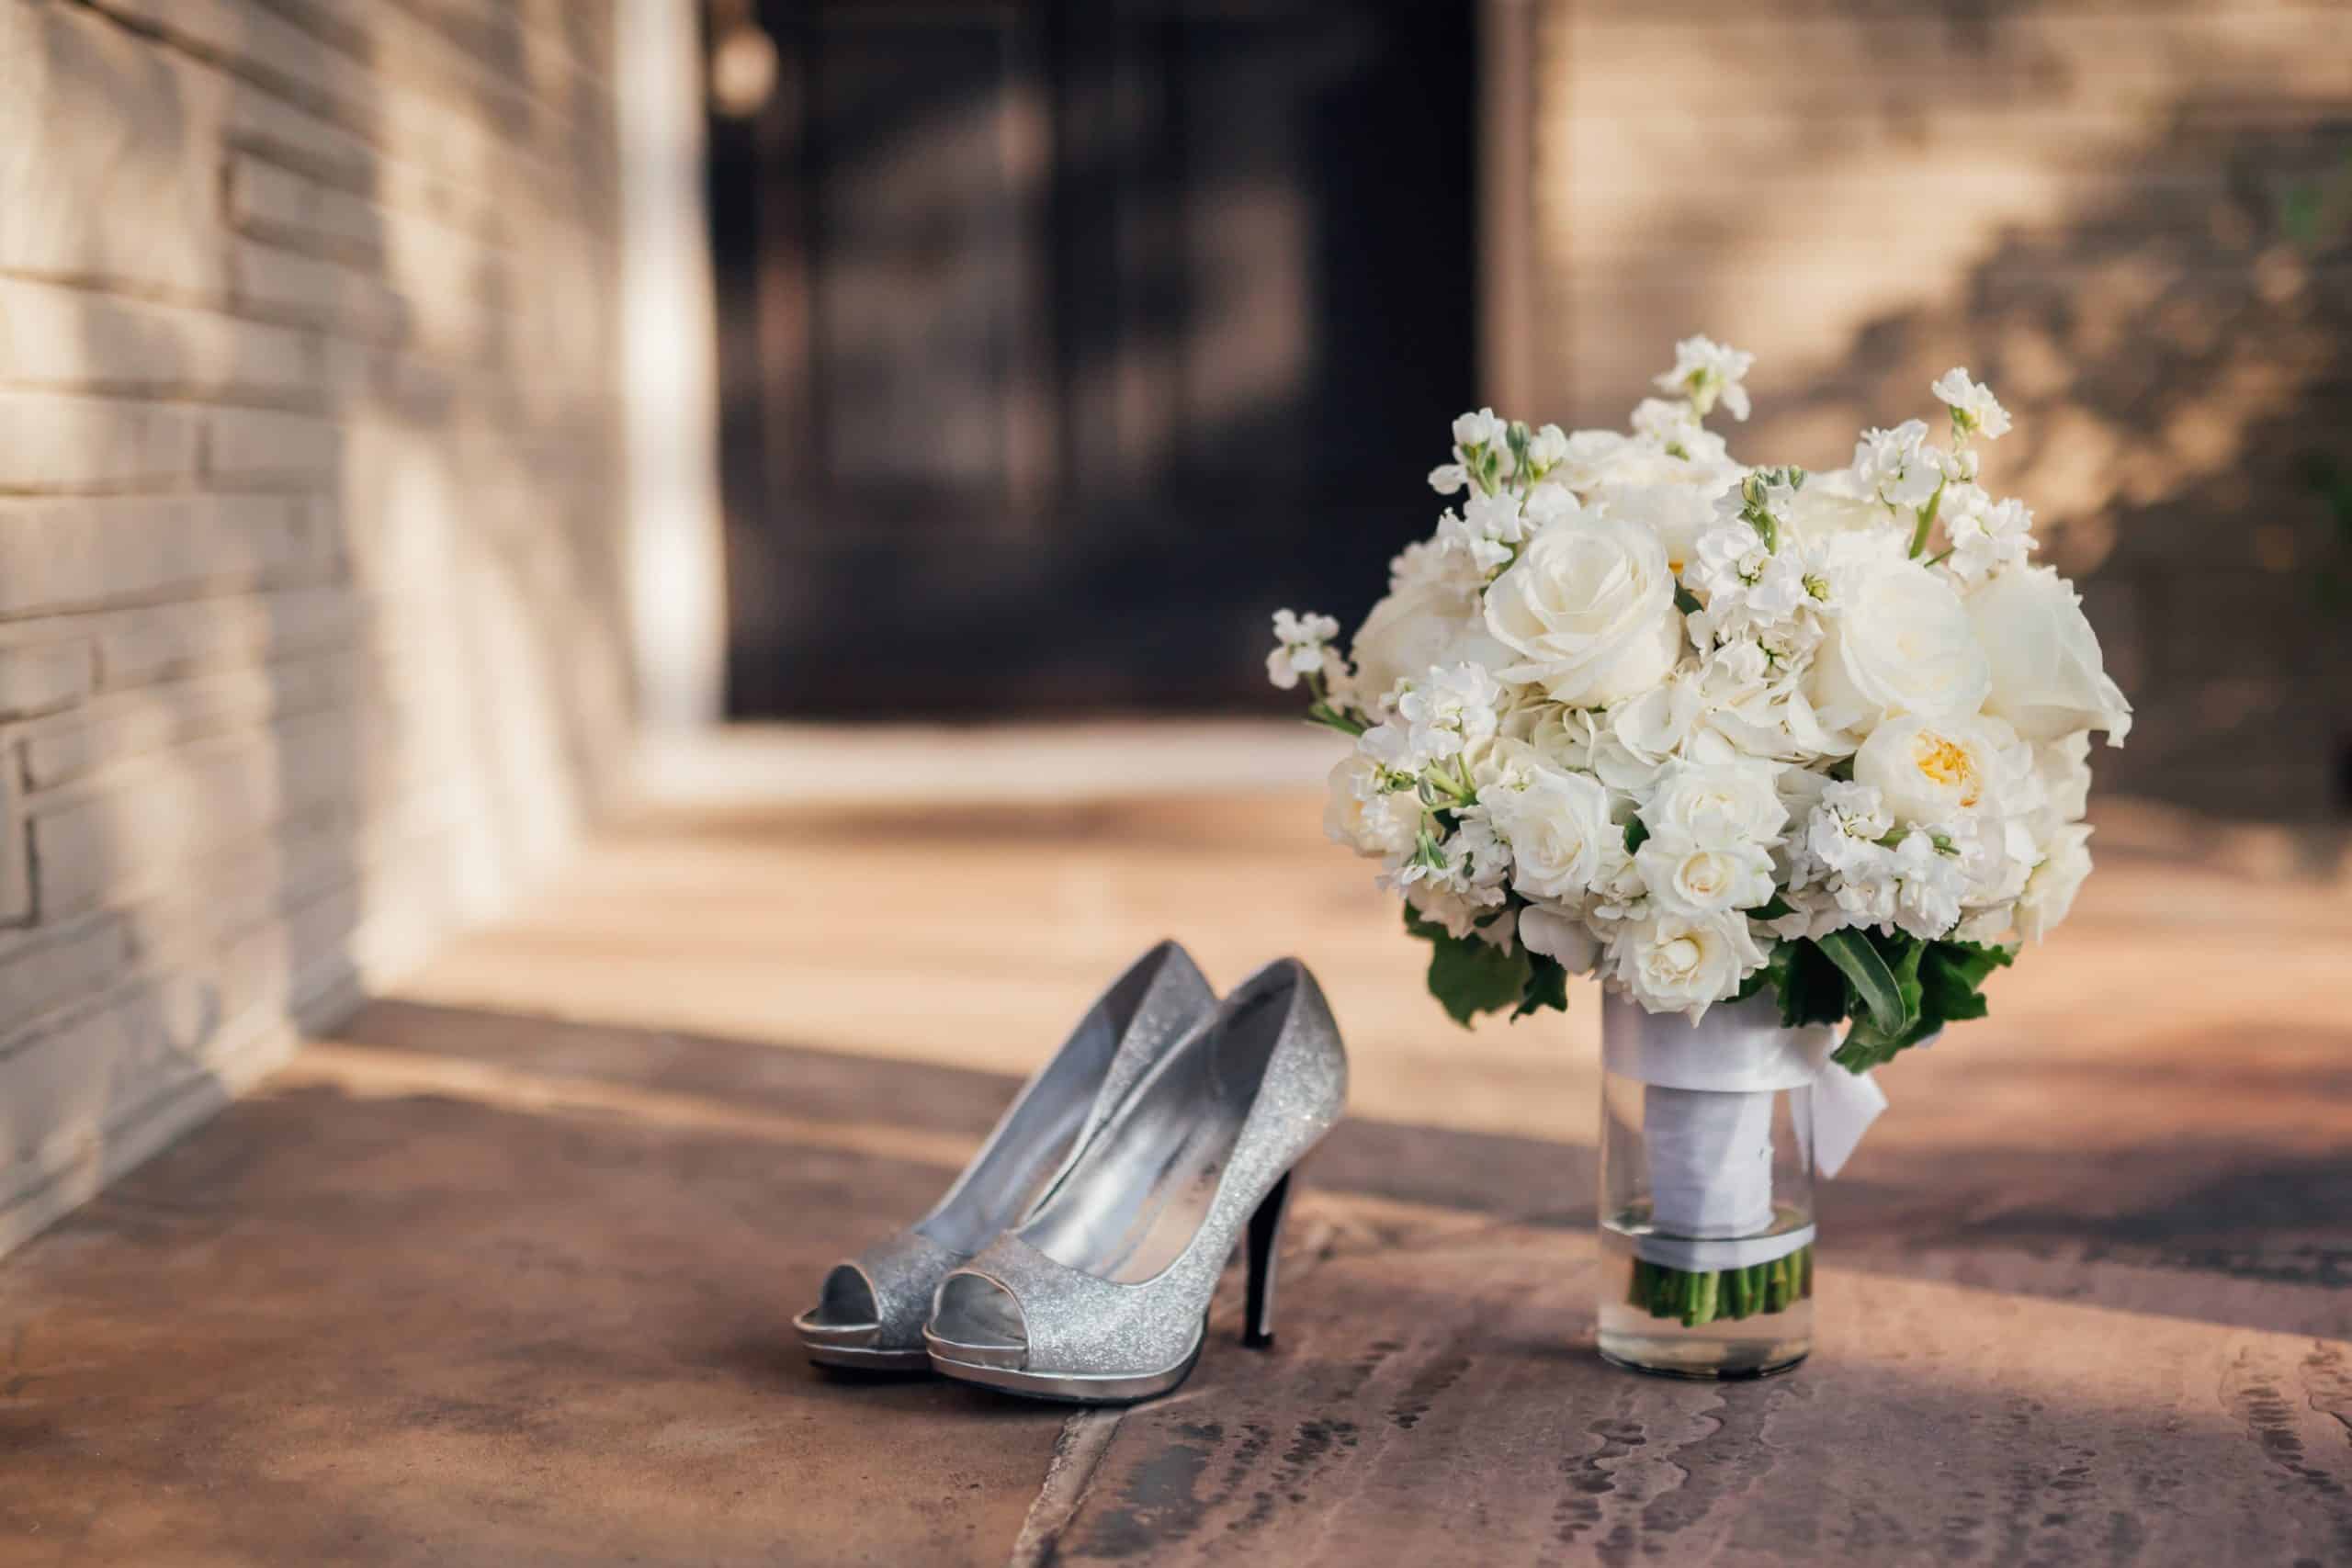 fancy-shoes-sit-next-to-a-wedding-bouquet-2022-11-15-11-55-07-utc